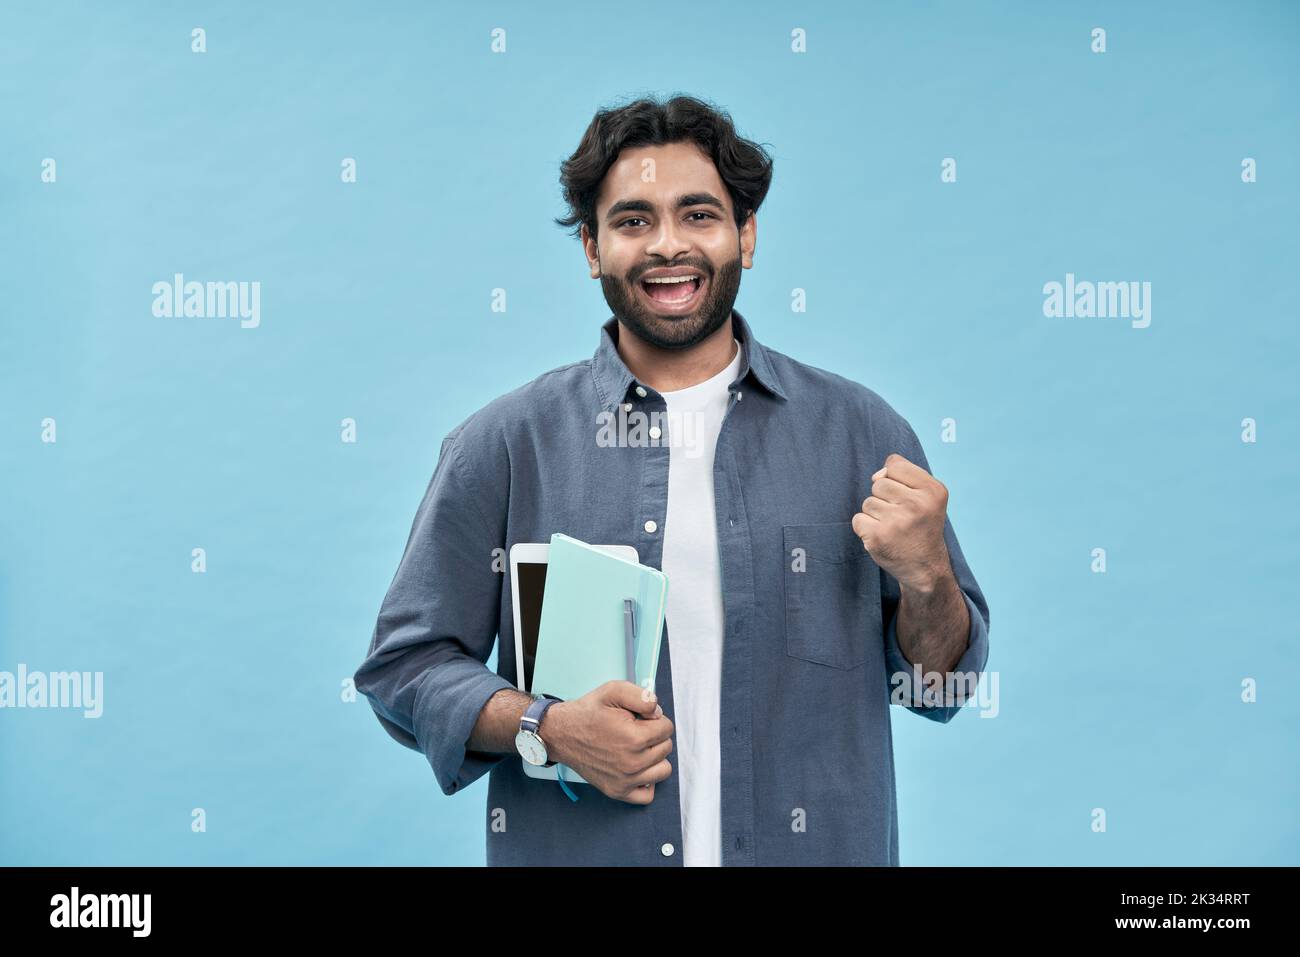 Happy arab young man student winner isolated on blue celebrating scholarship. Stock Photo